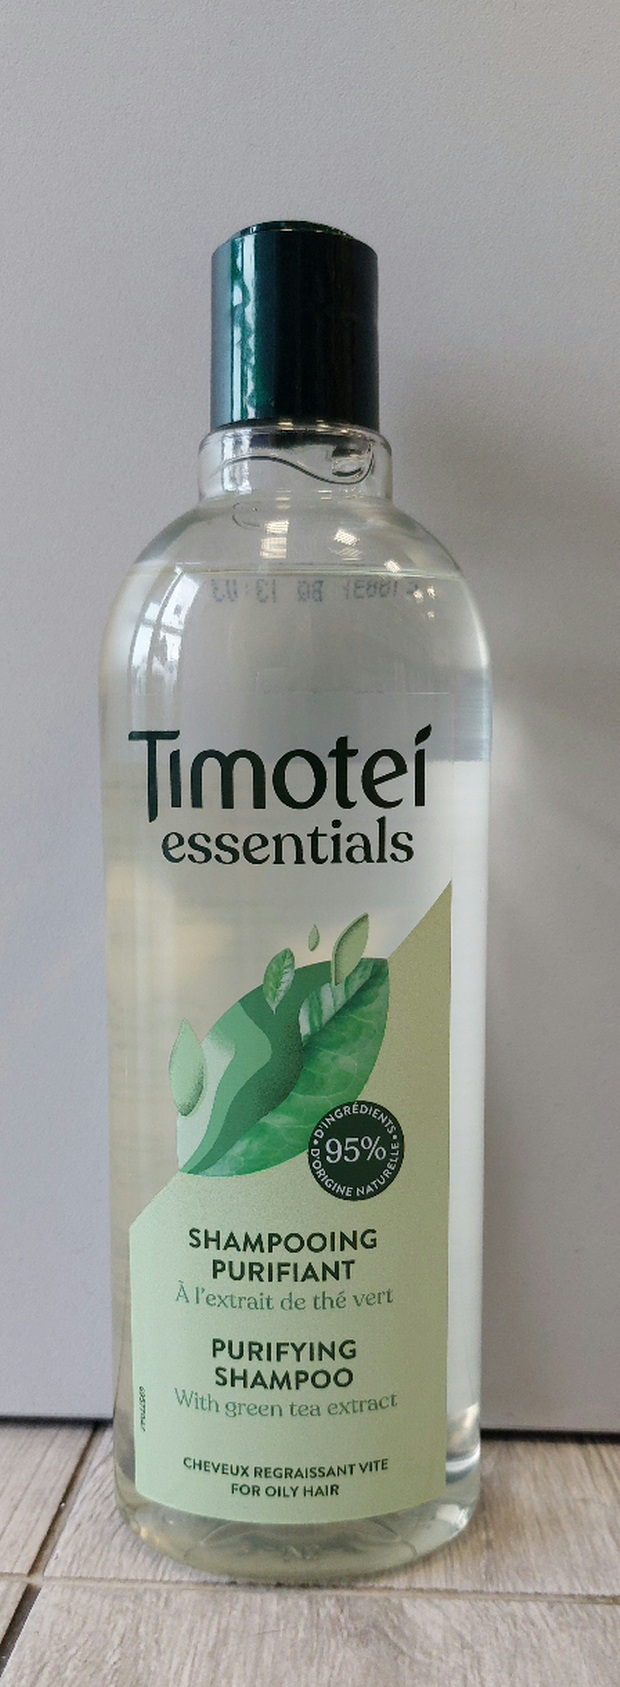 szampon timotei zielona herbata